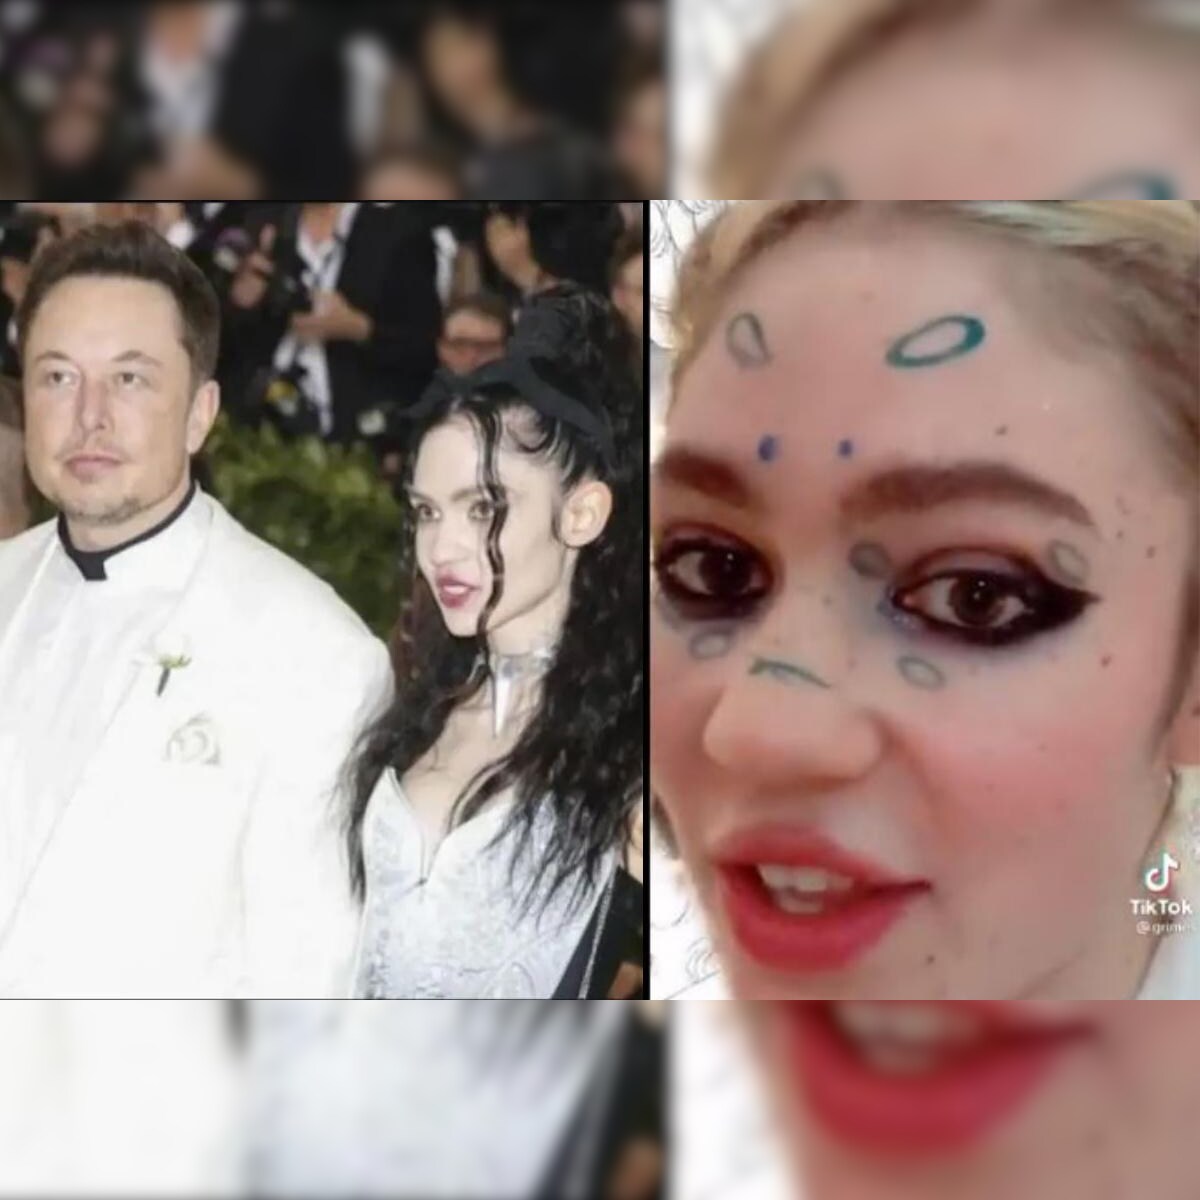 Verrassend genoeg Festival De databank Grimes, Who is Dating Billionaire Elon Musk, Went on Bizarre TikTok Rant  About AI and Communism